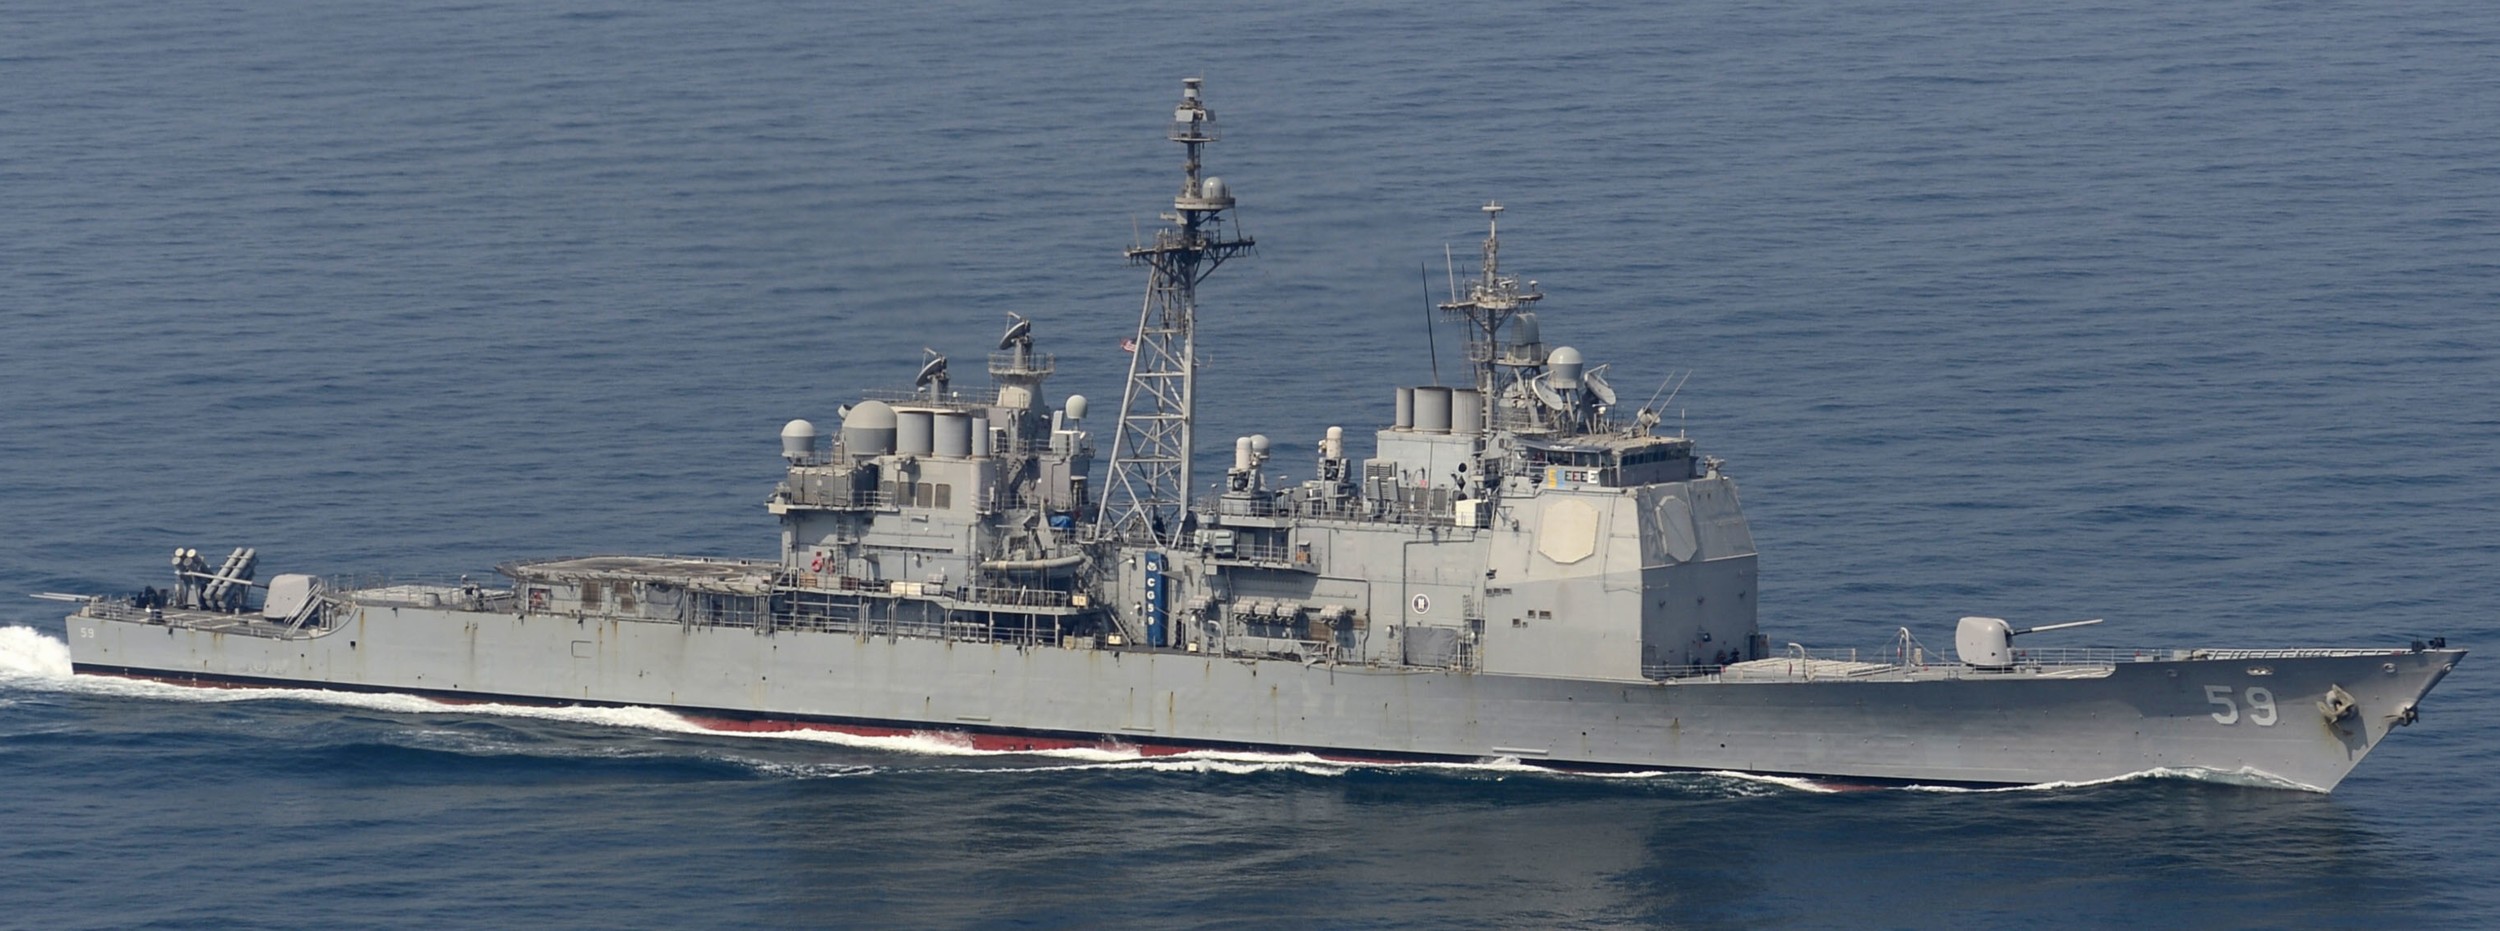 cg-59 uss princeton ticonderoga class guided missile cruiser aegis us navy arabian gulf 77